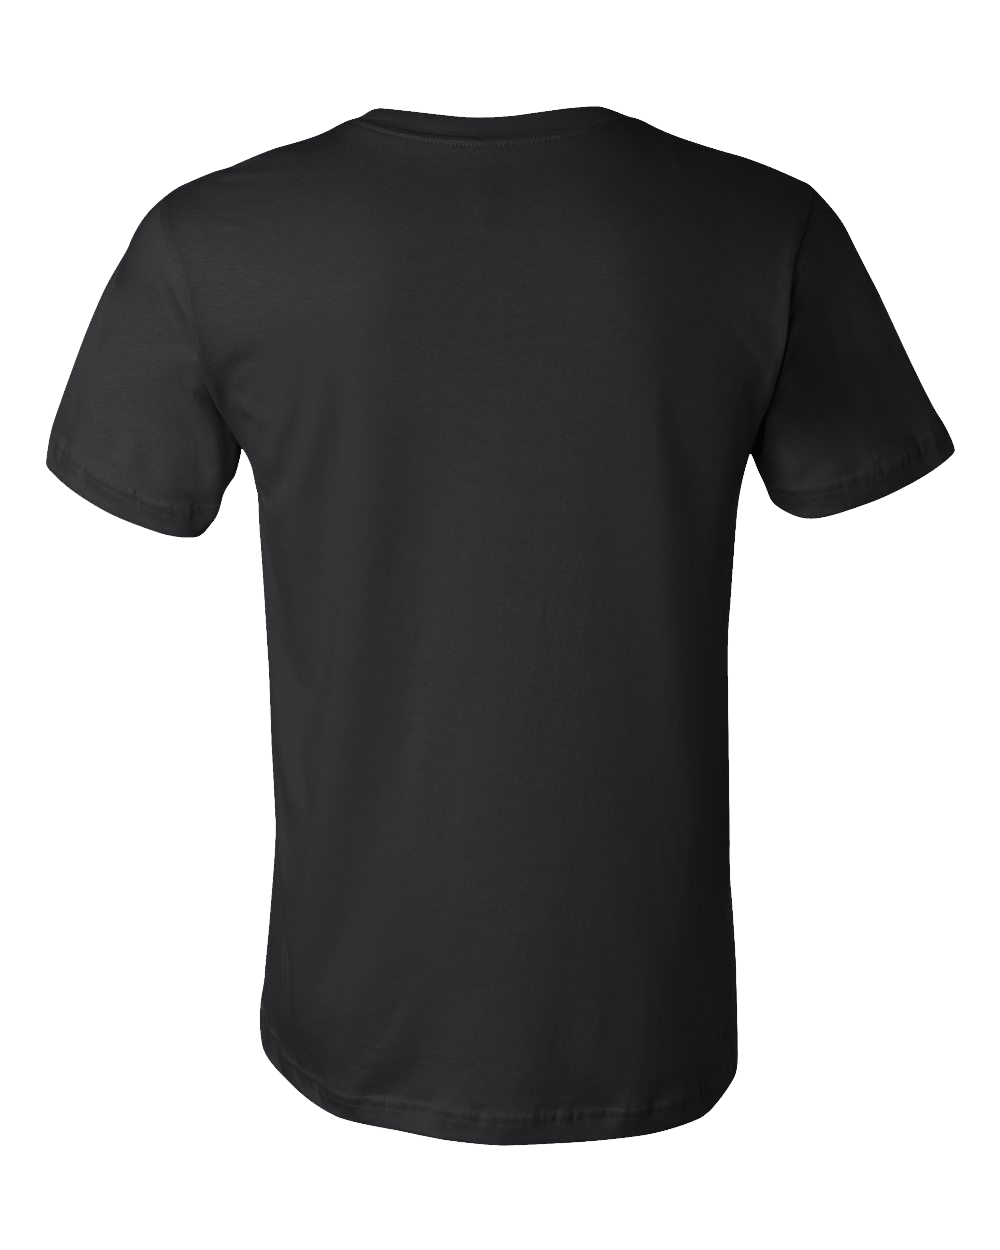 Standard Black Marion, IA | Retro, Vintage Style Iowa Pride  T-shirt